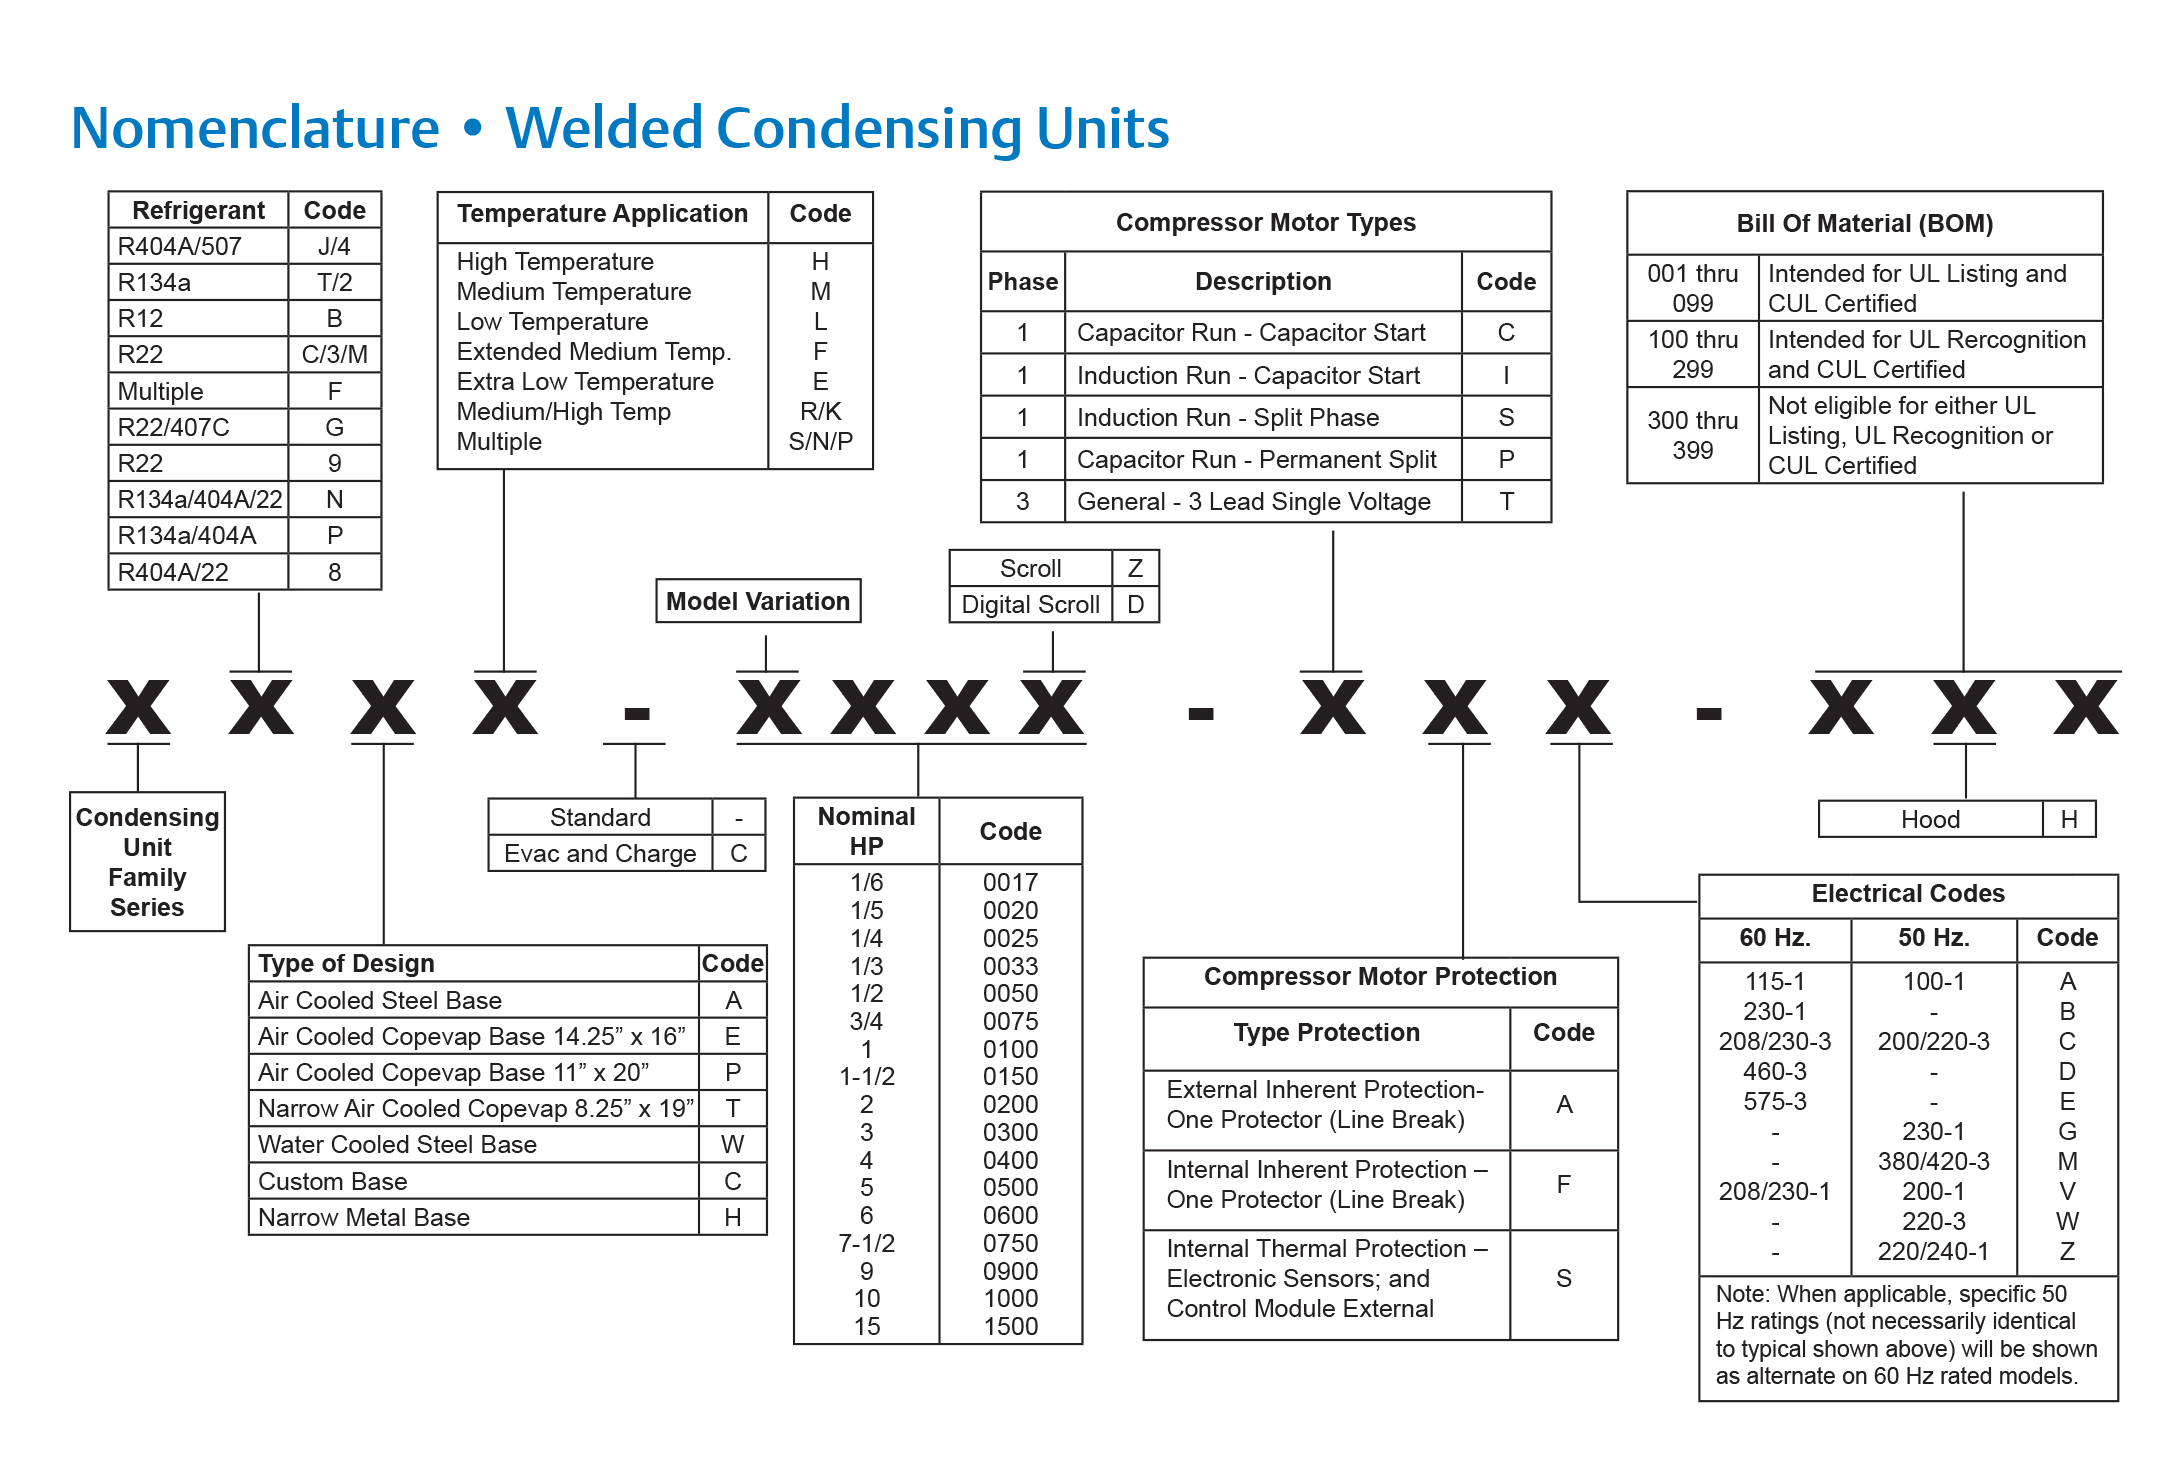 Copeland Compressor Troubleshooting Chart